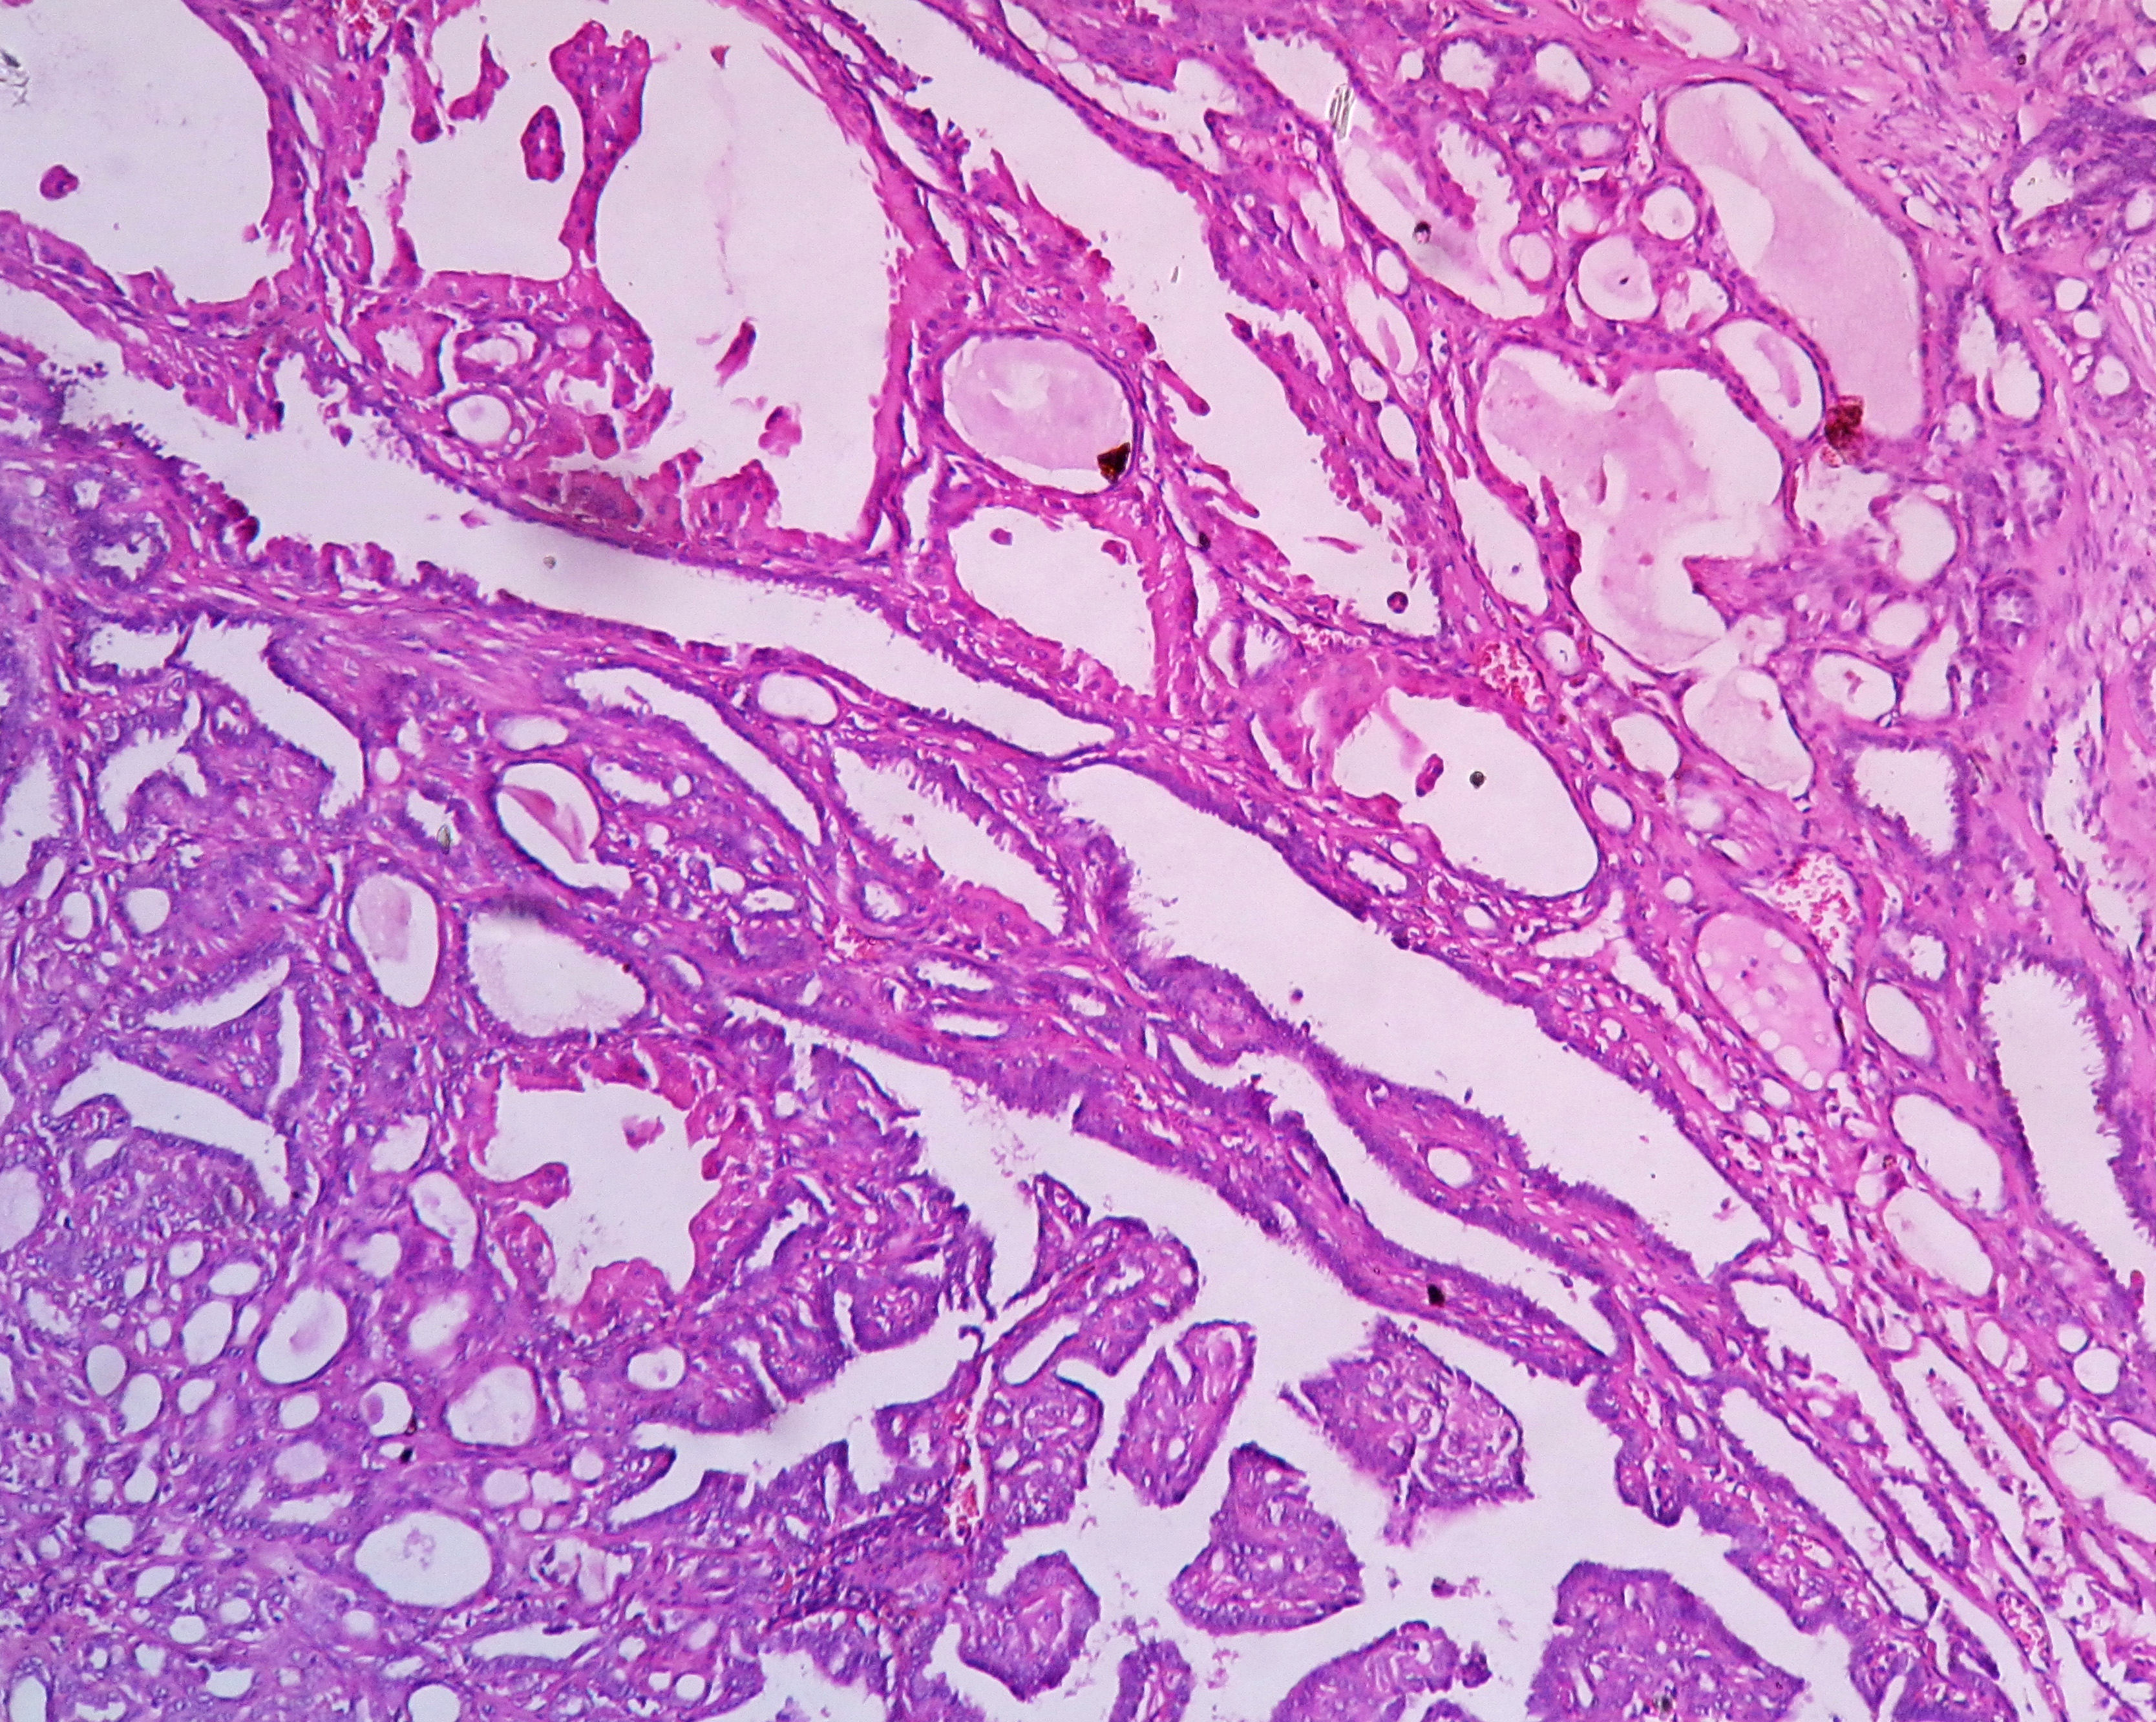 Papiloma intraductal com metaplasia apocrina - Intraductal papilloma with focal apocrine metaplasia